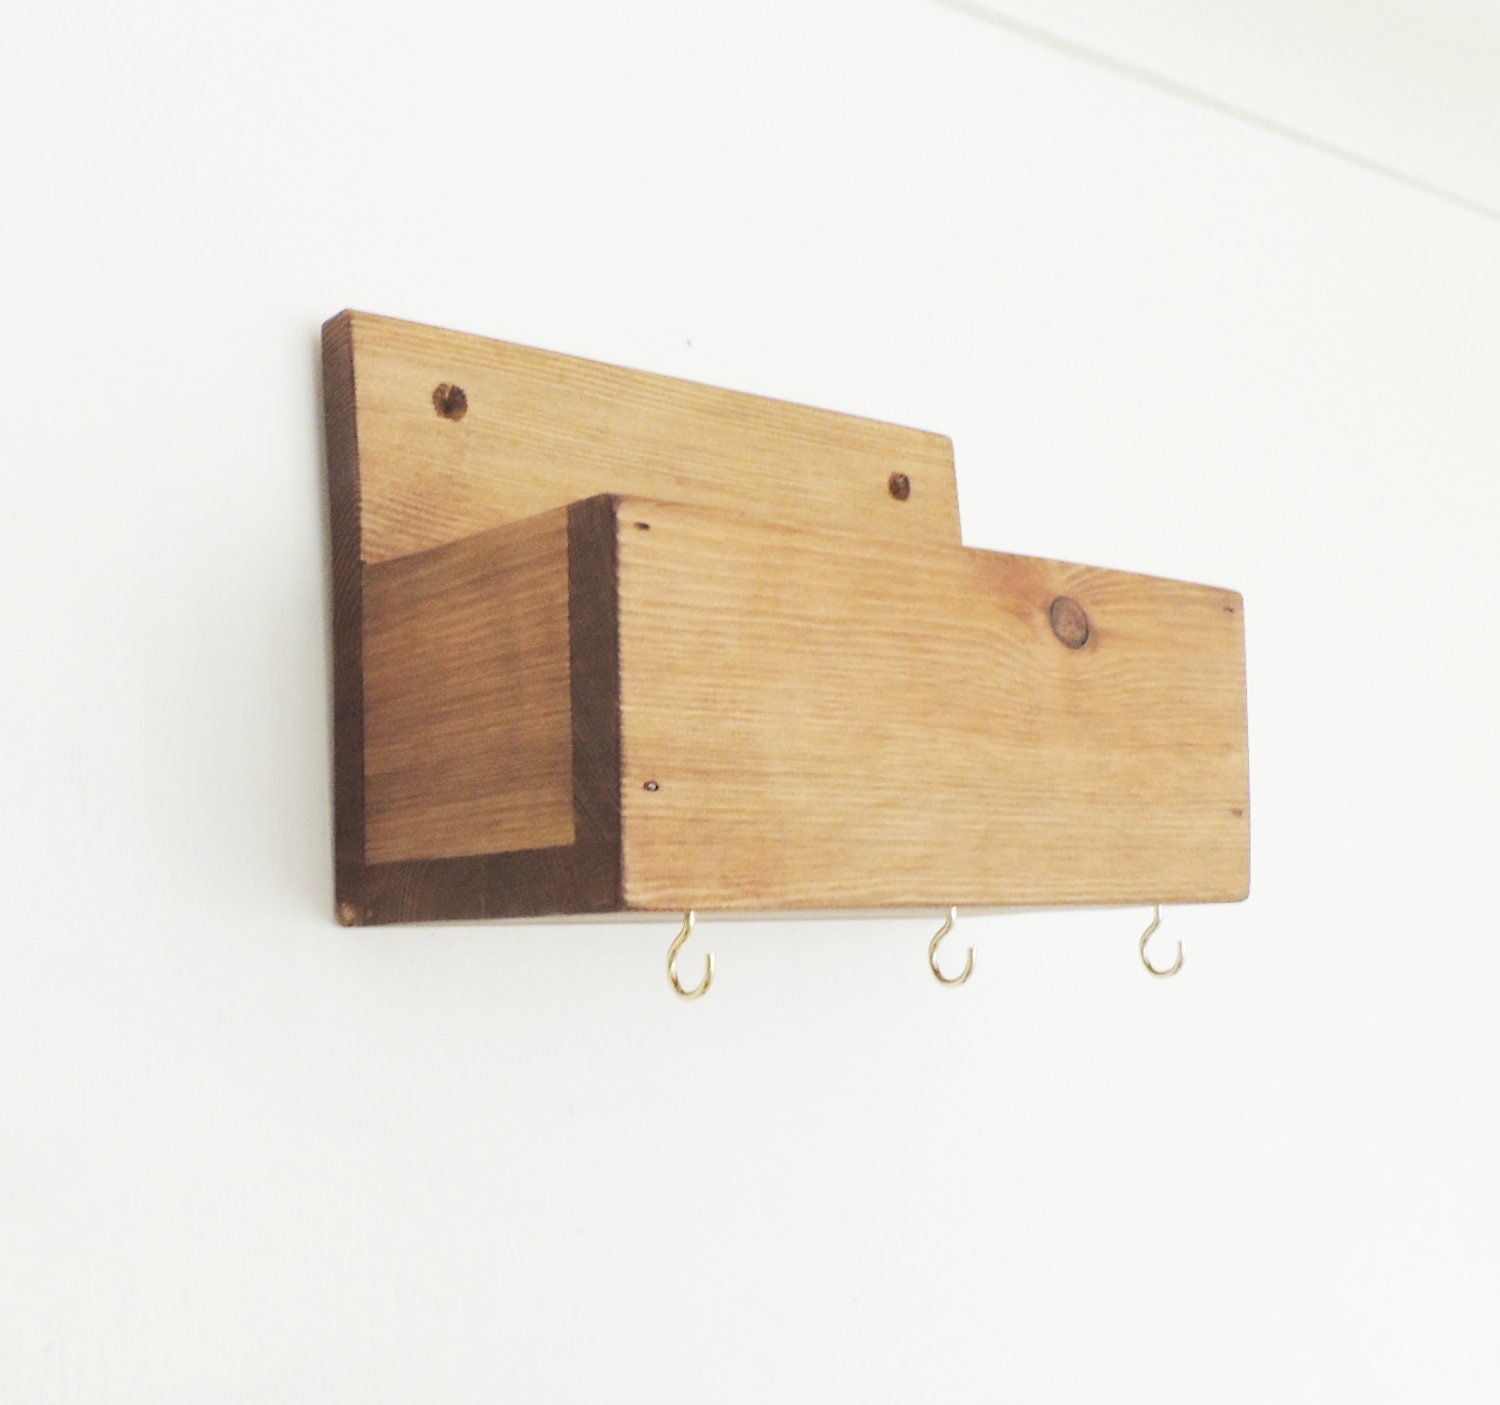 wooden hall holder rustic storage shelf key holder wooden wall shelf caddy 